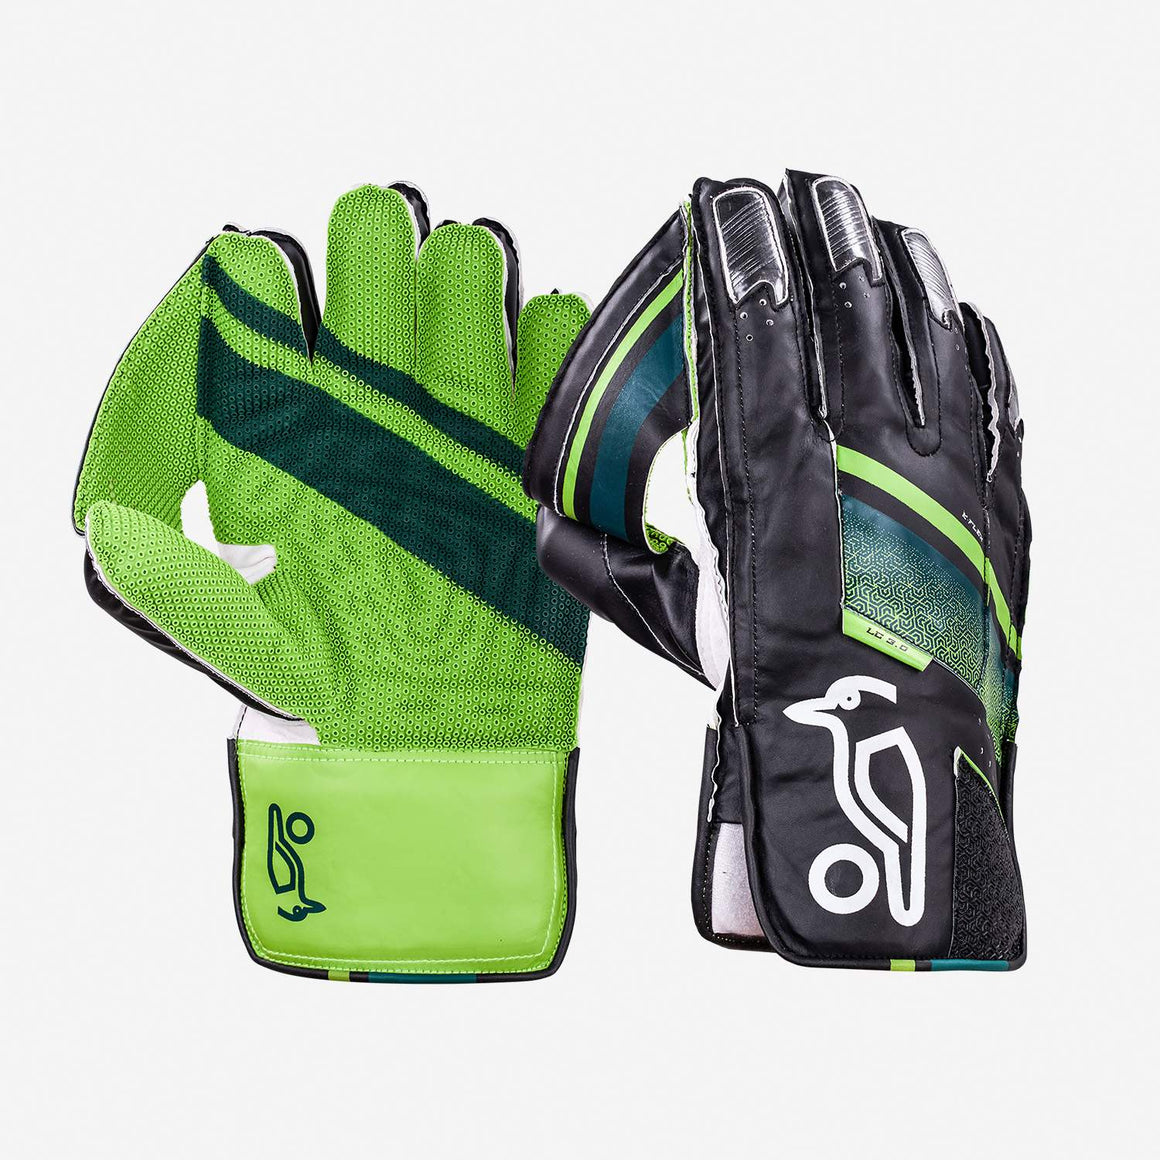 Kookaburra LC 3.0 WK Gloves